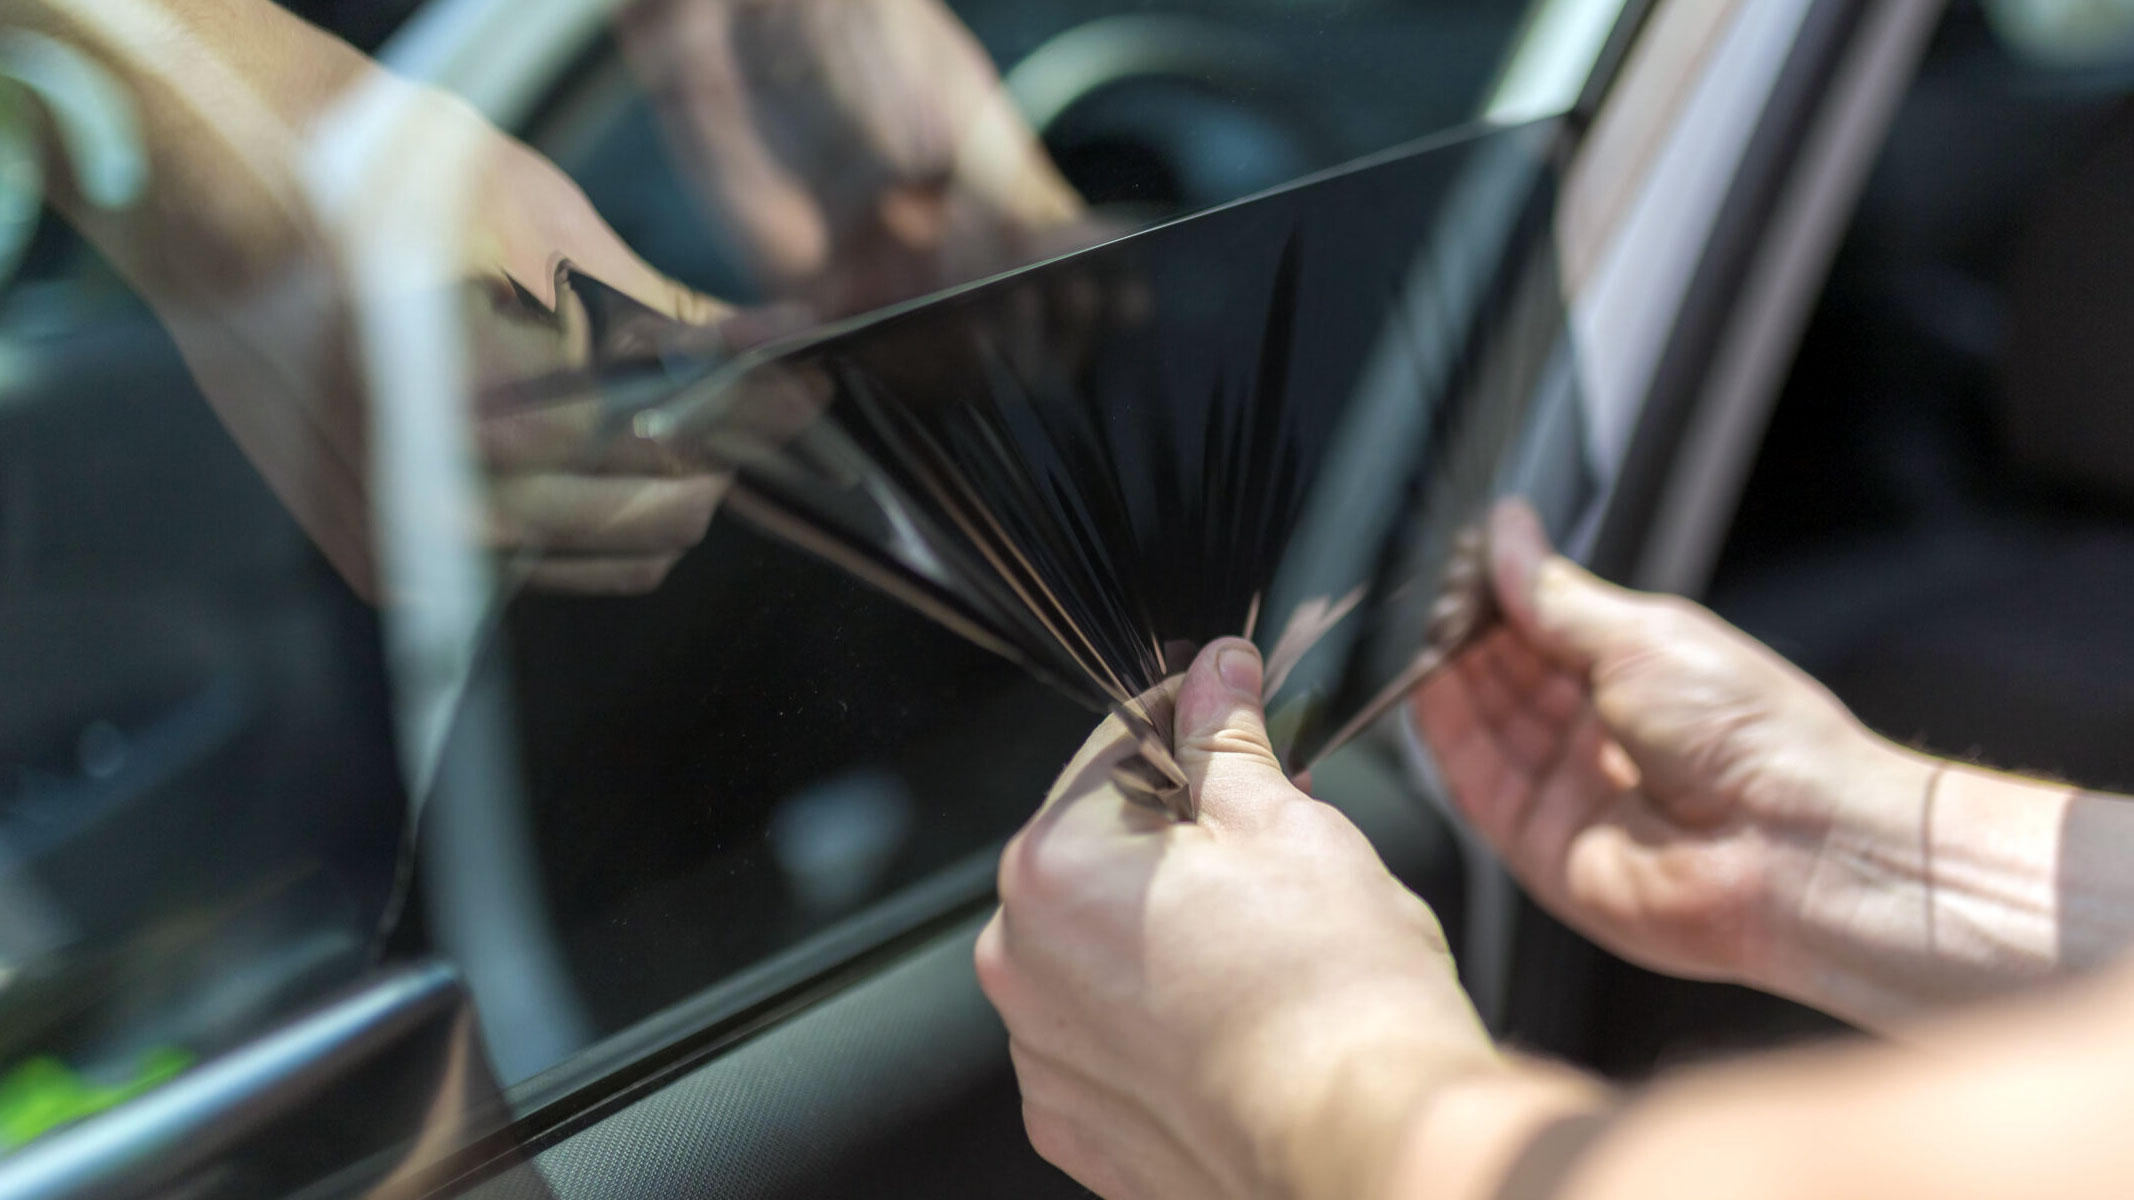 Car Window Tint Adhesive Remover